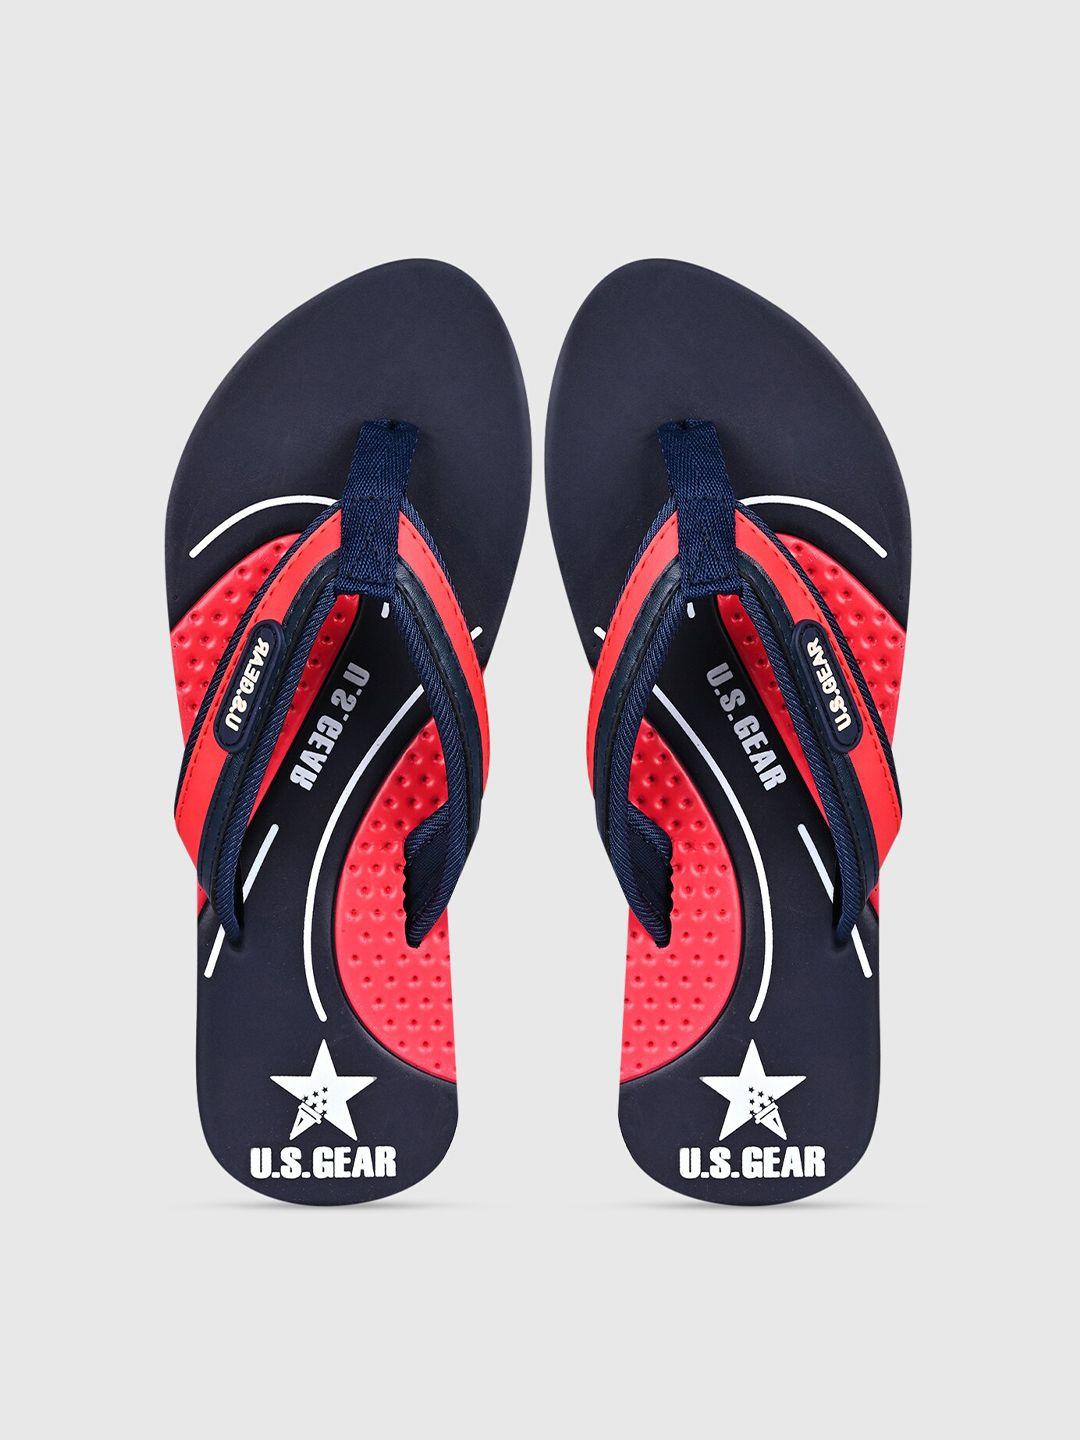 u s gear women navy blue & red printed rubber thong flip-flops